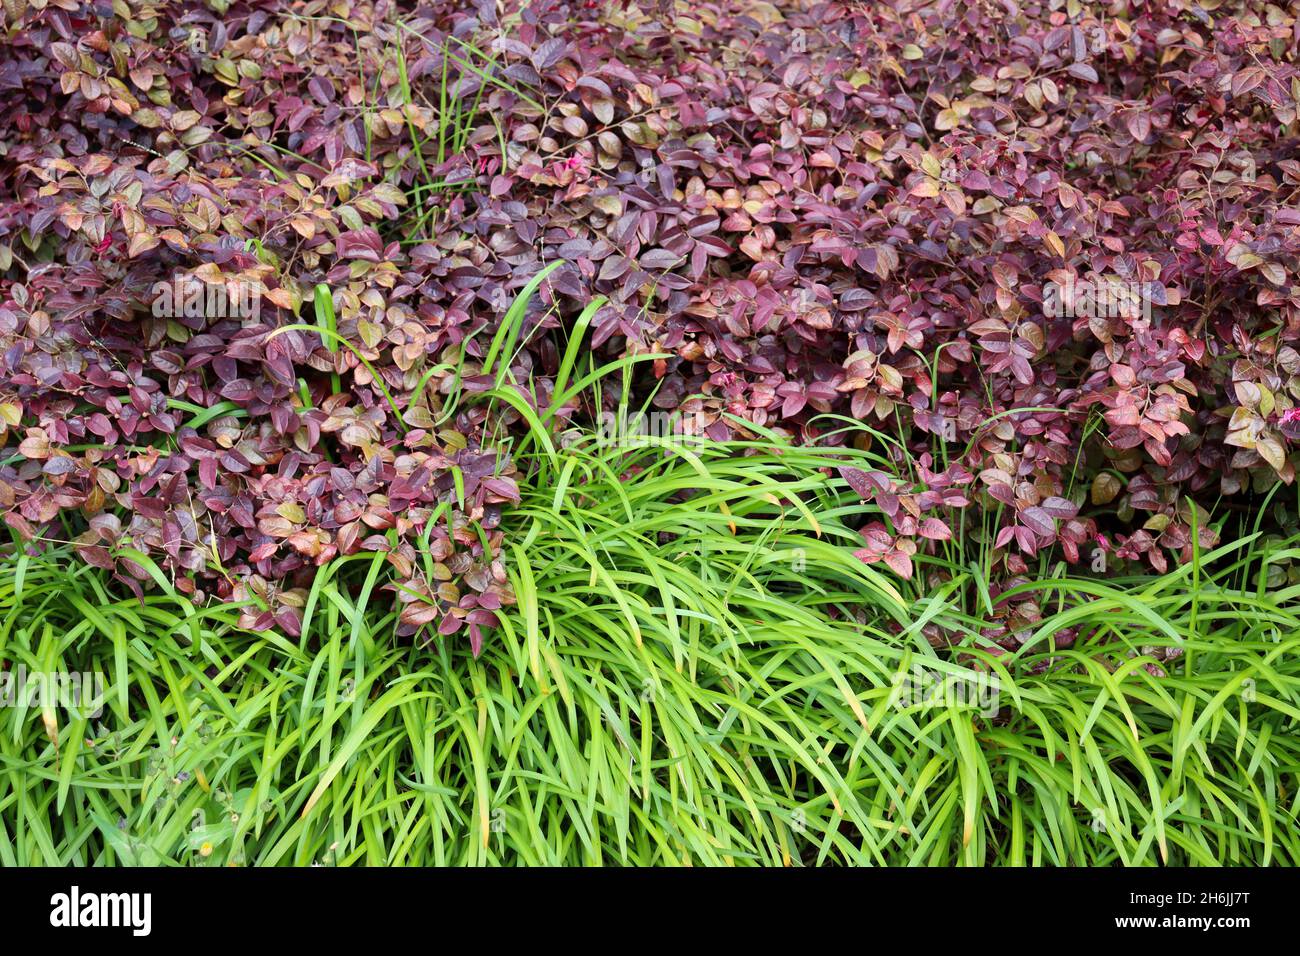 Beautiful view of a garden full of purple joyweeds (Alternanthera) Stock Photo